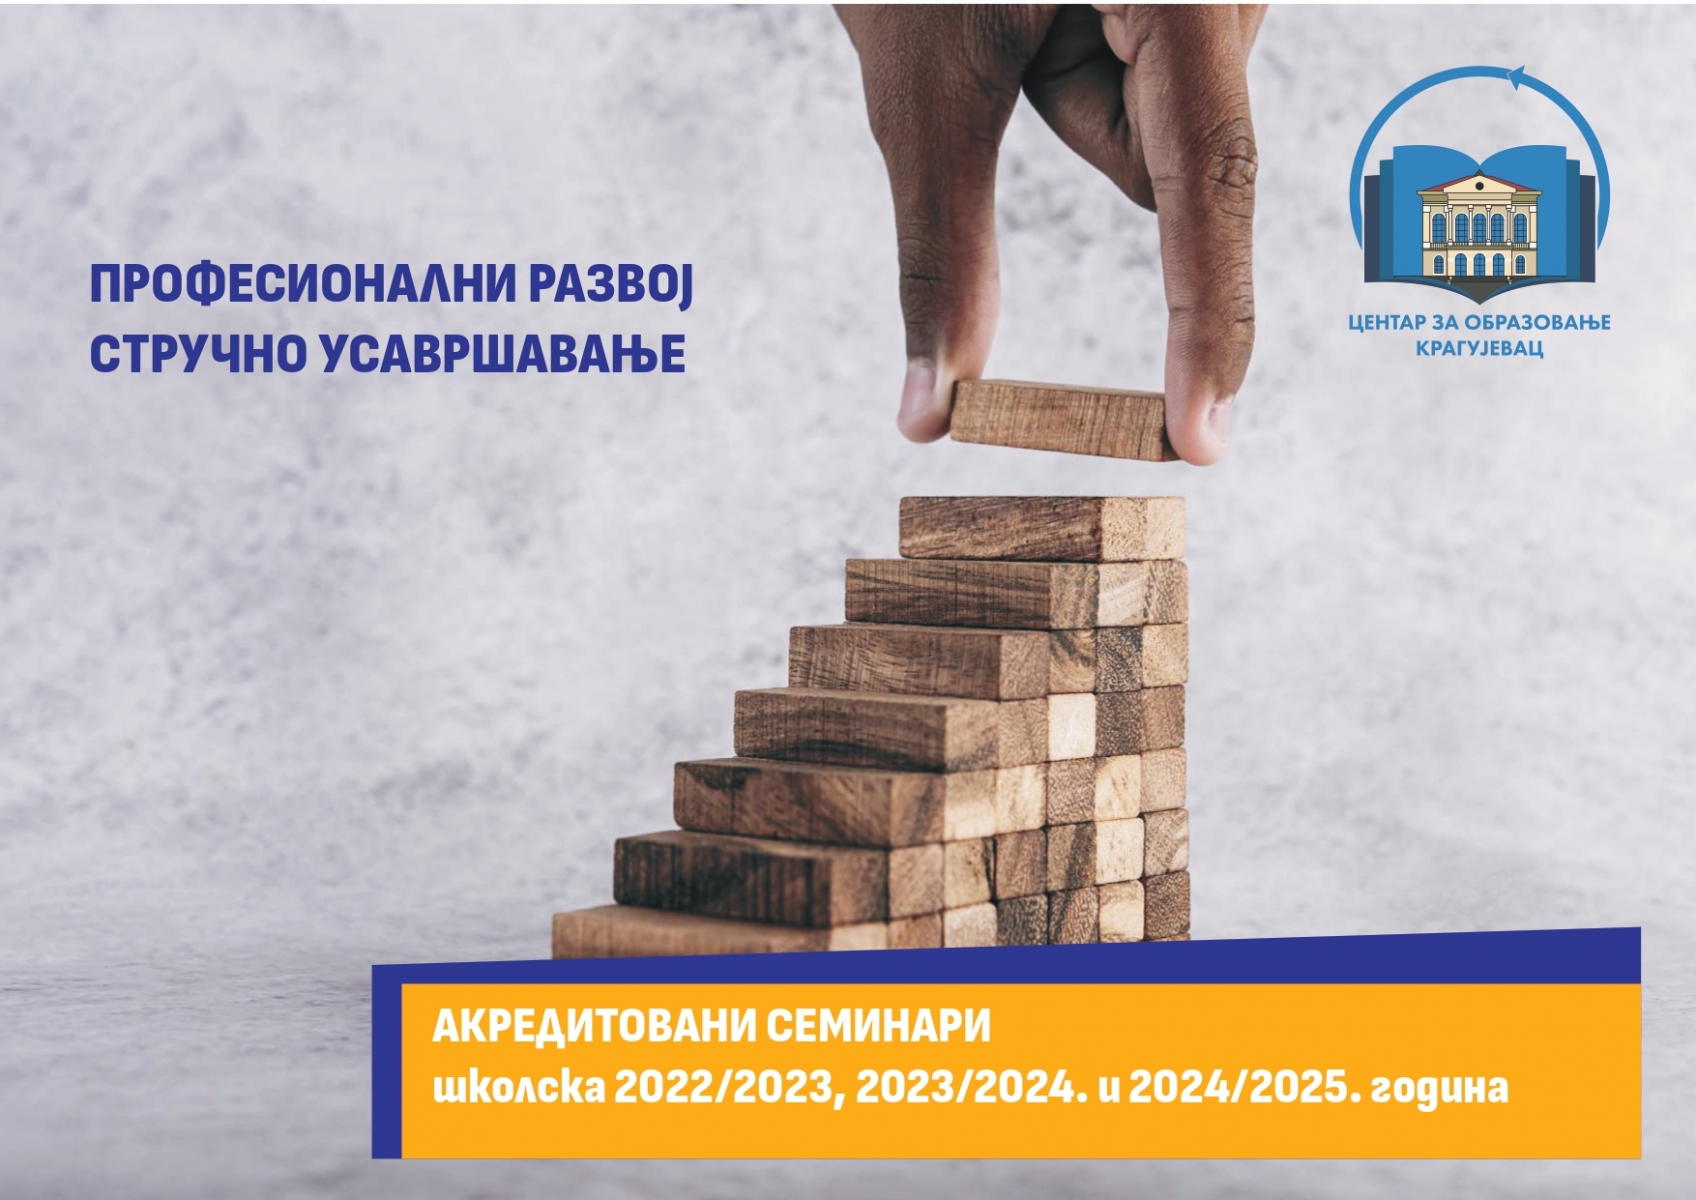 Katalog-akreditovanih-seminara-Centar-za-obrazovanje-Kragujevac_compressed-1_page-0001